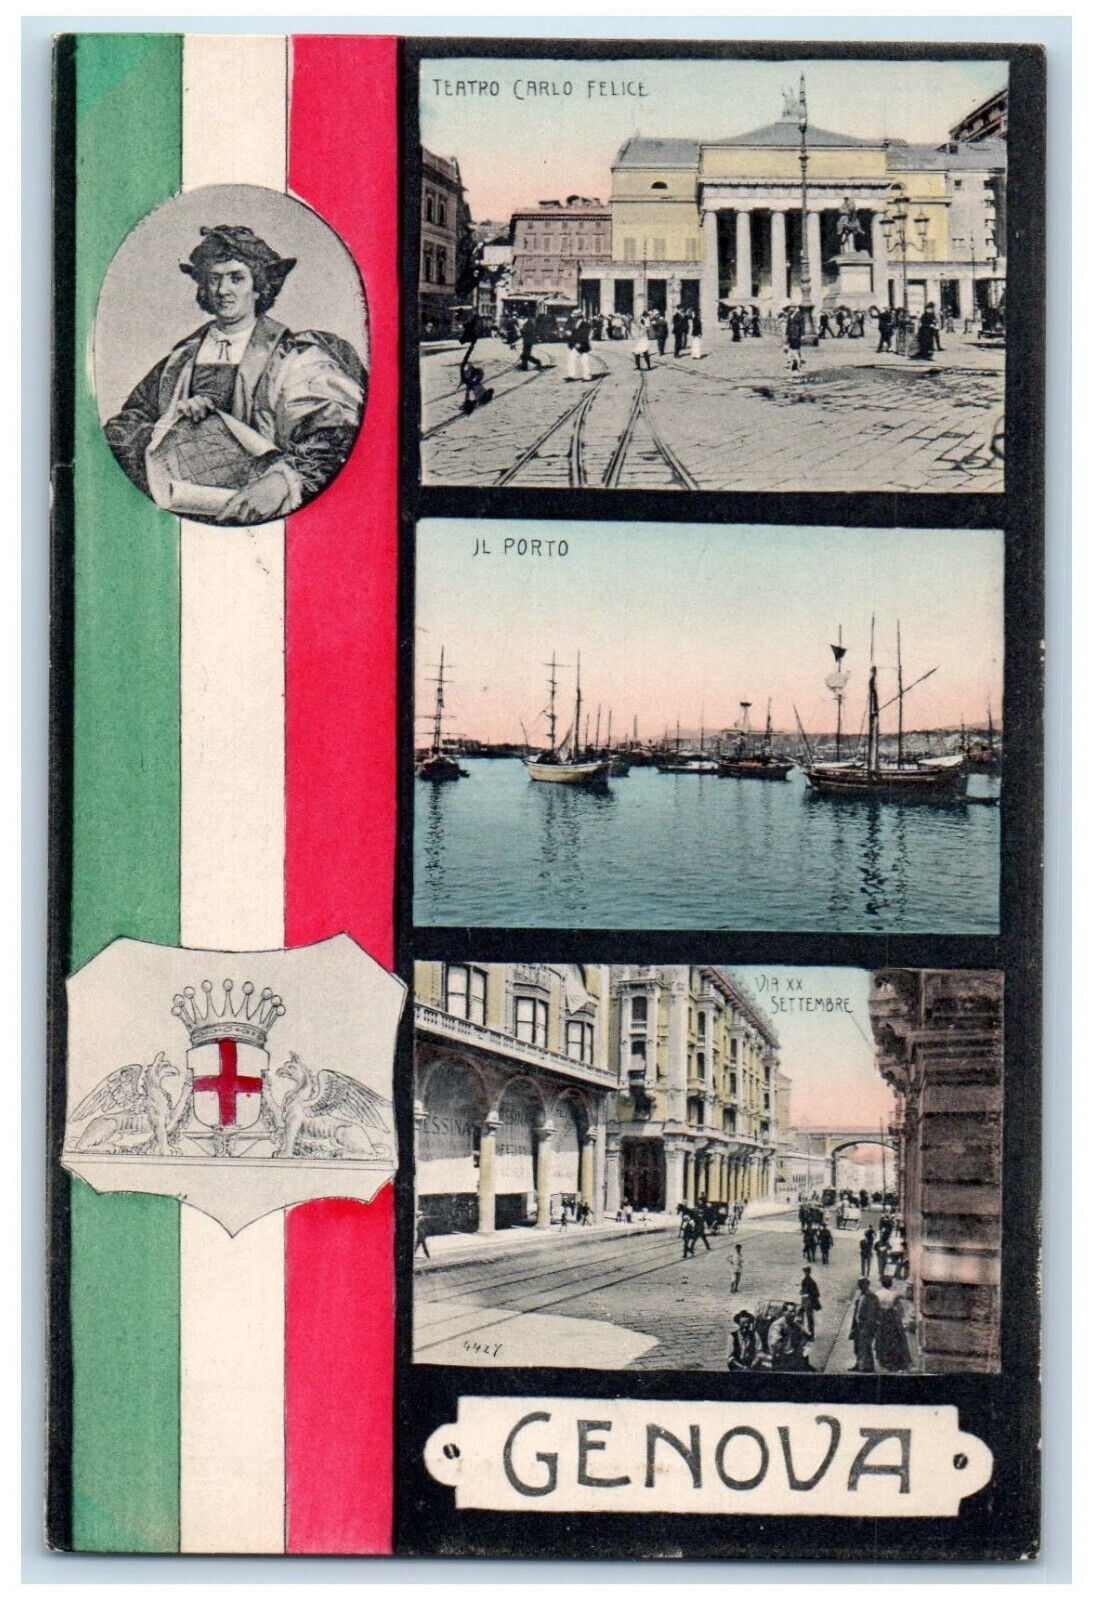 c1910 Via Settembre JL Porto Boat Teatro Carlo Felice Genova Italy Postcard